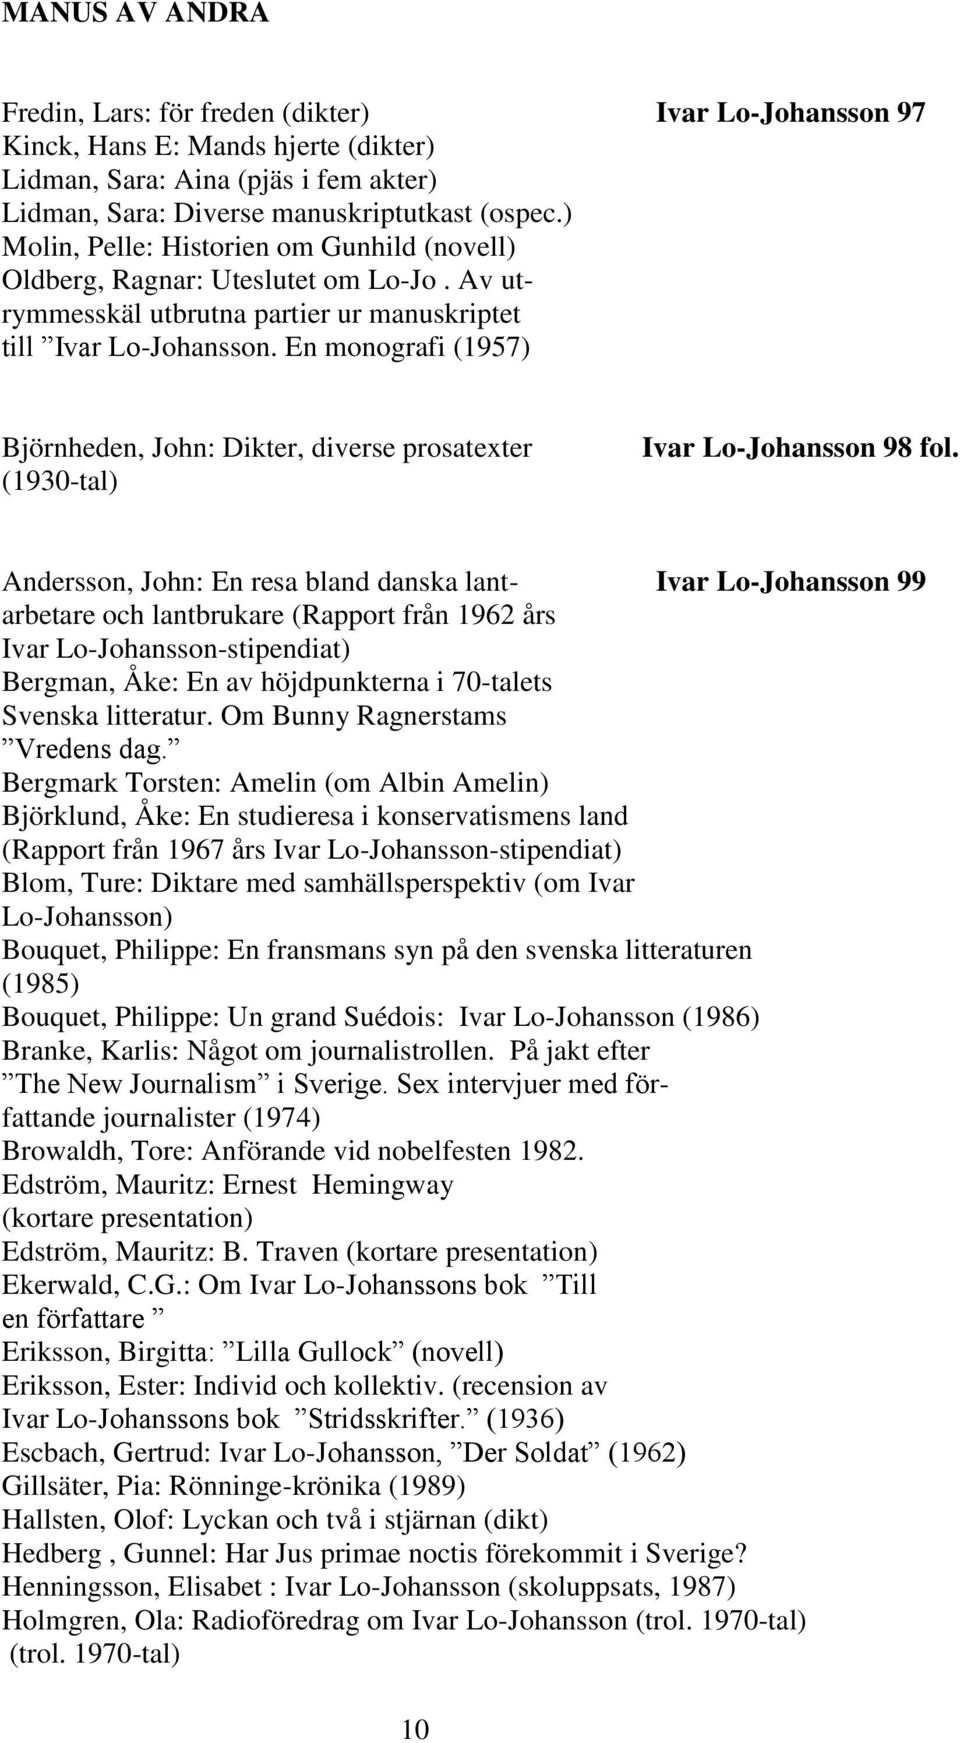 En monografi (1957) Björnheden, John: Dikter, diverse prosatexter (1930-tal) Ivar Lo-Johansson 98 fol.